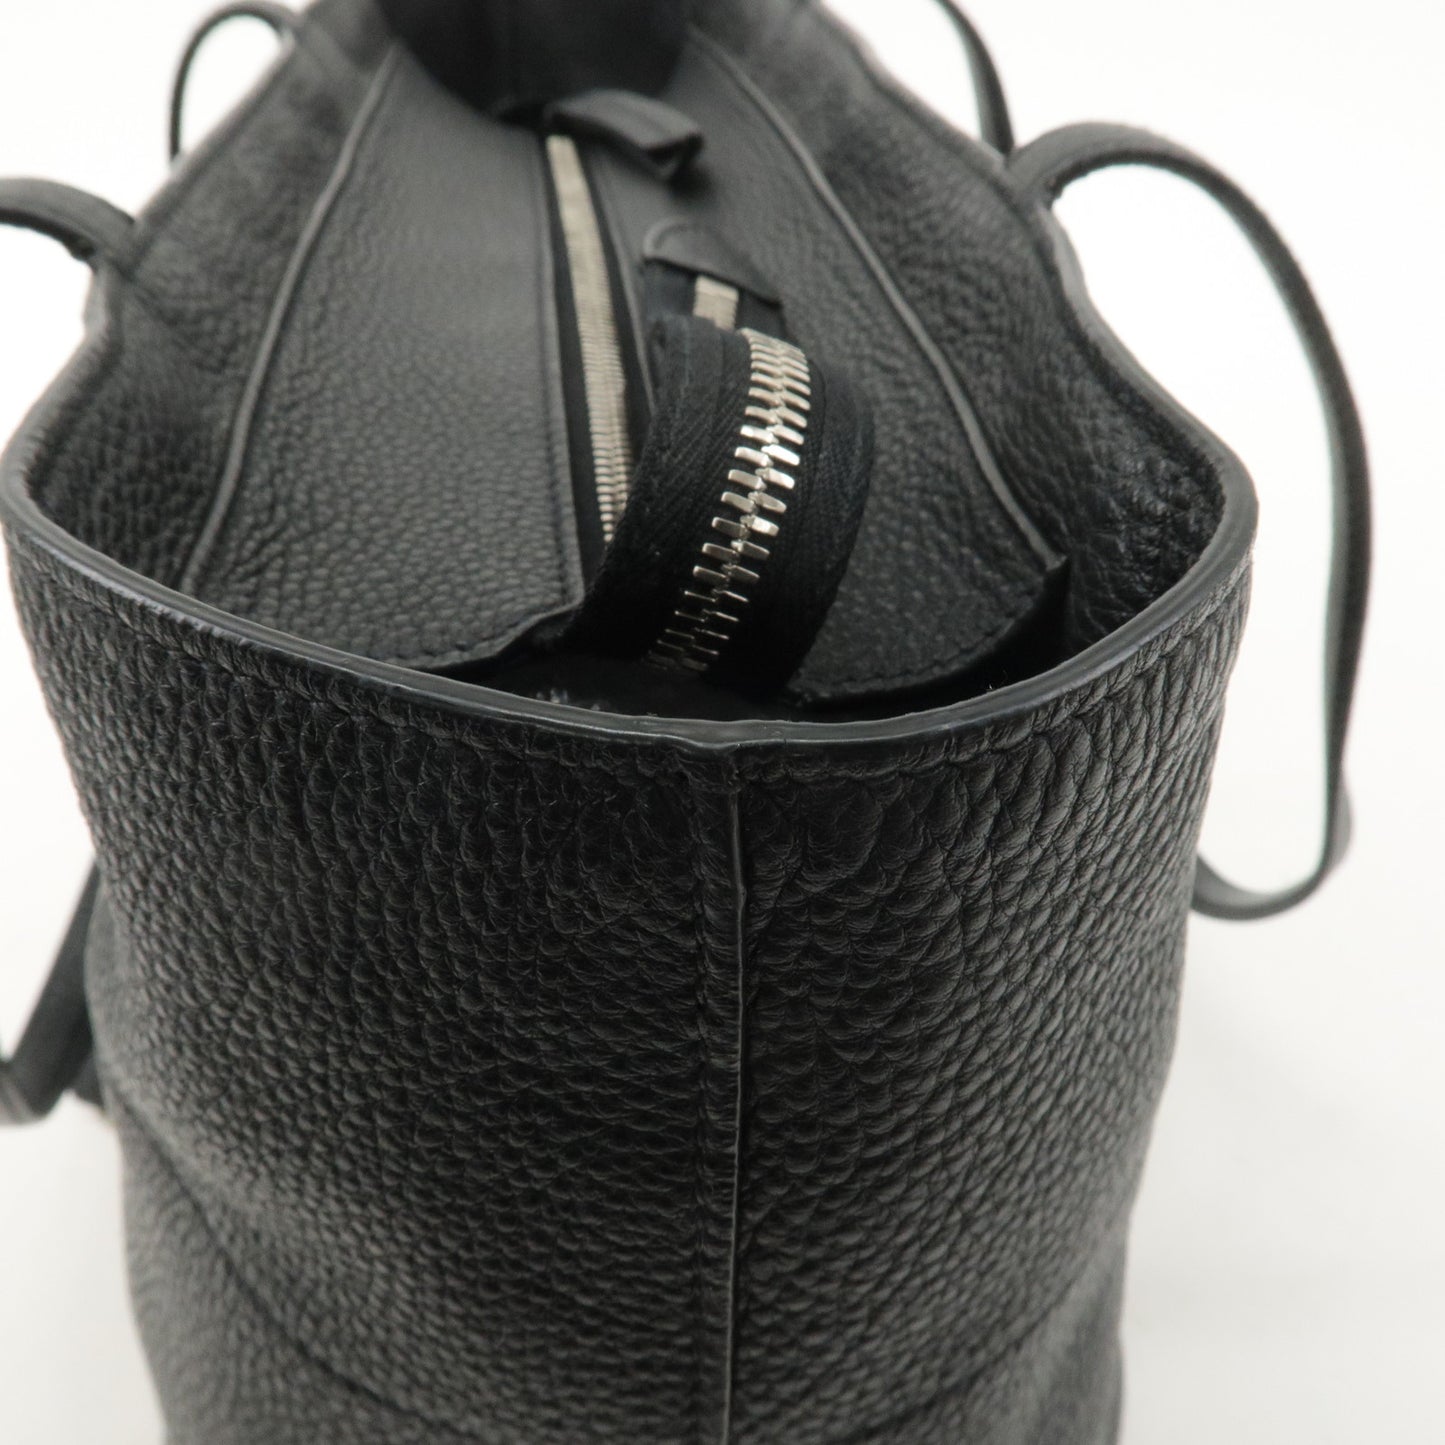 PRADA Leather Tote Bag Shoulder Bag Black 1BG203